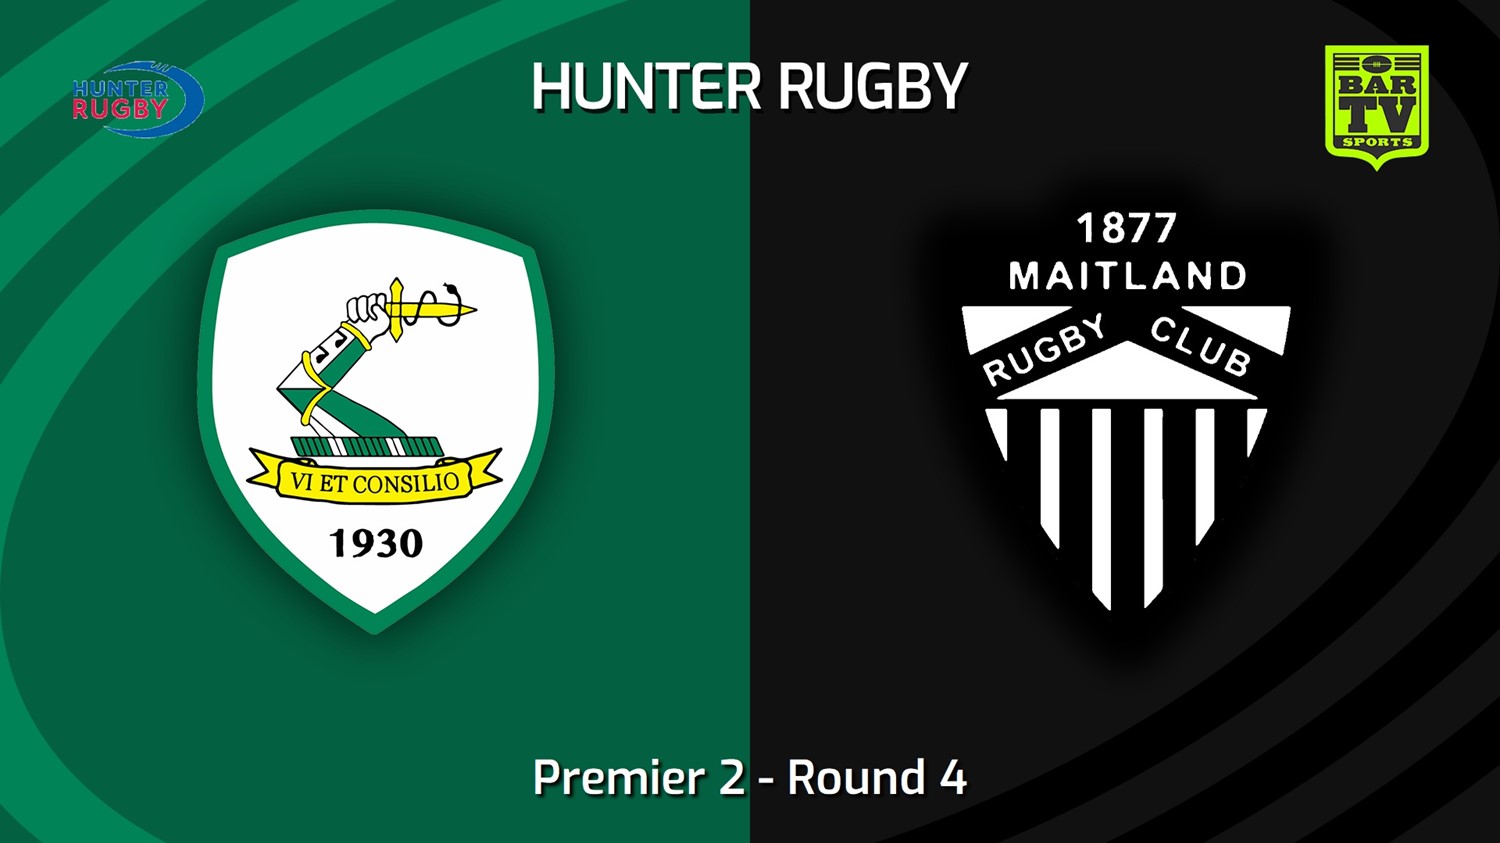 230506-Hunter Rugby Round 4 - Premier 2 - Merewether Carlton v Maitland Minigame Slate Image